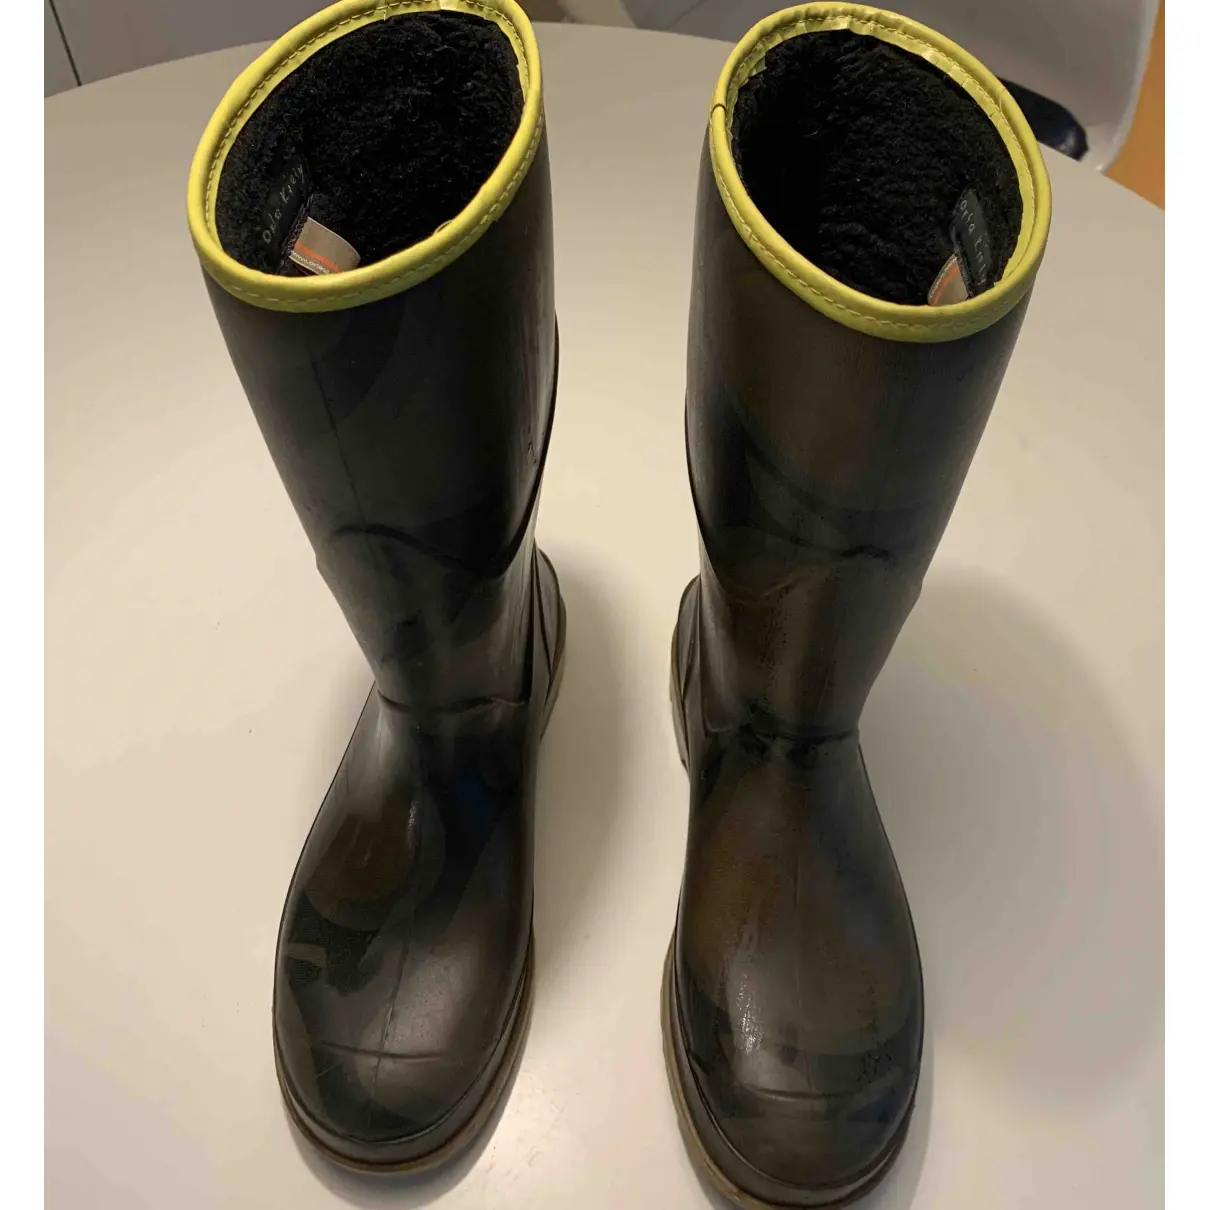 Buy Orla Kiely Wellington boots online